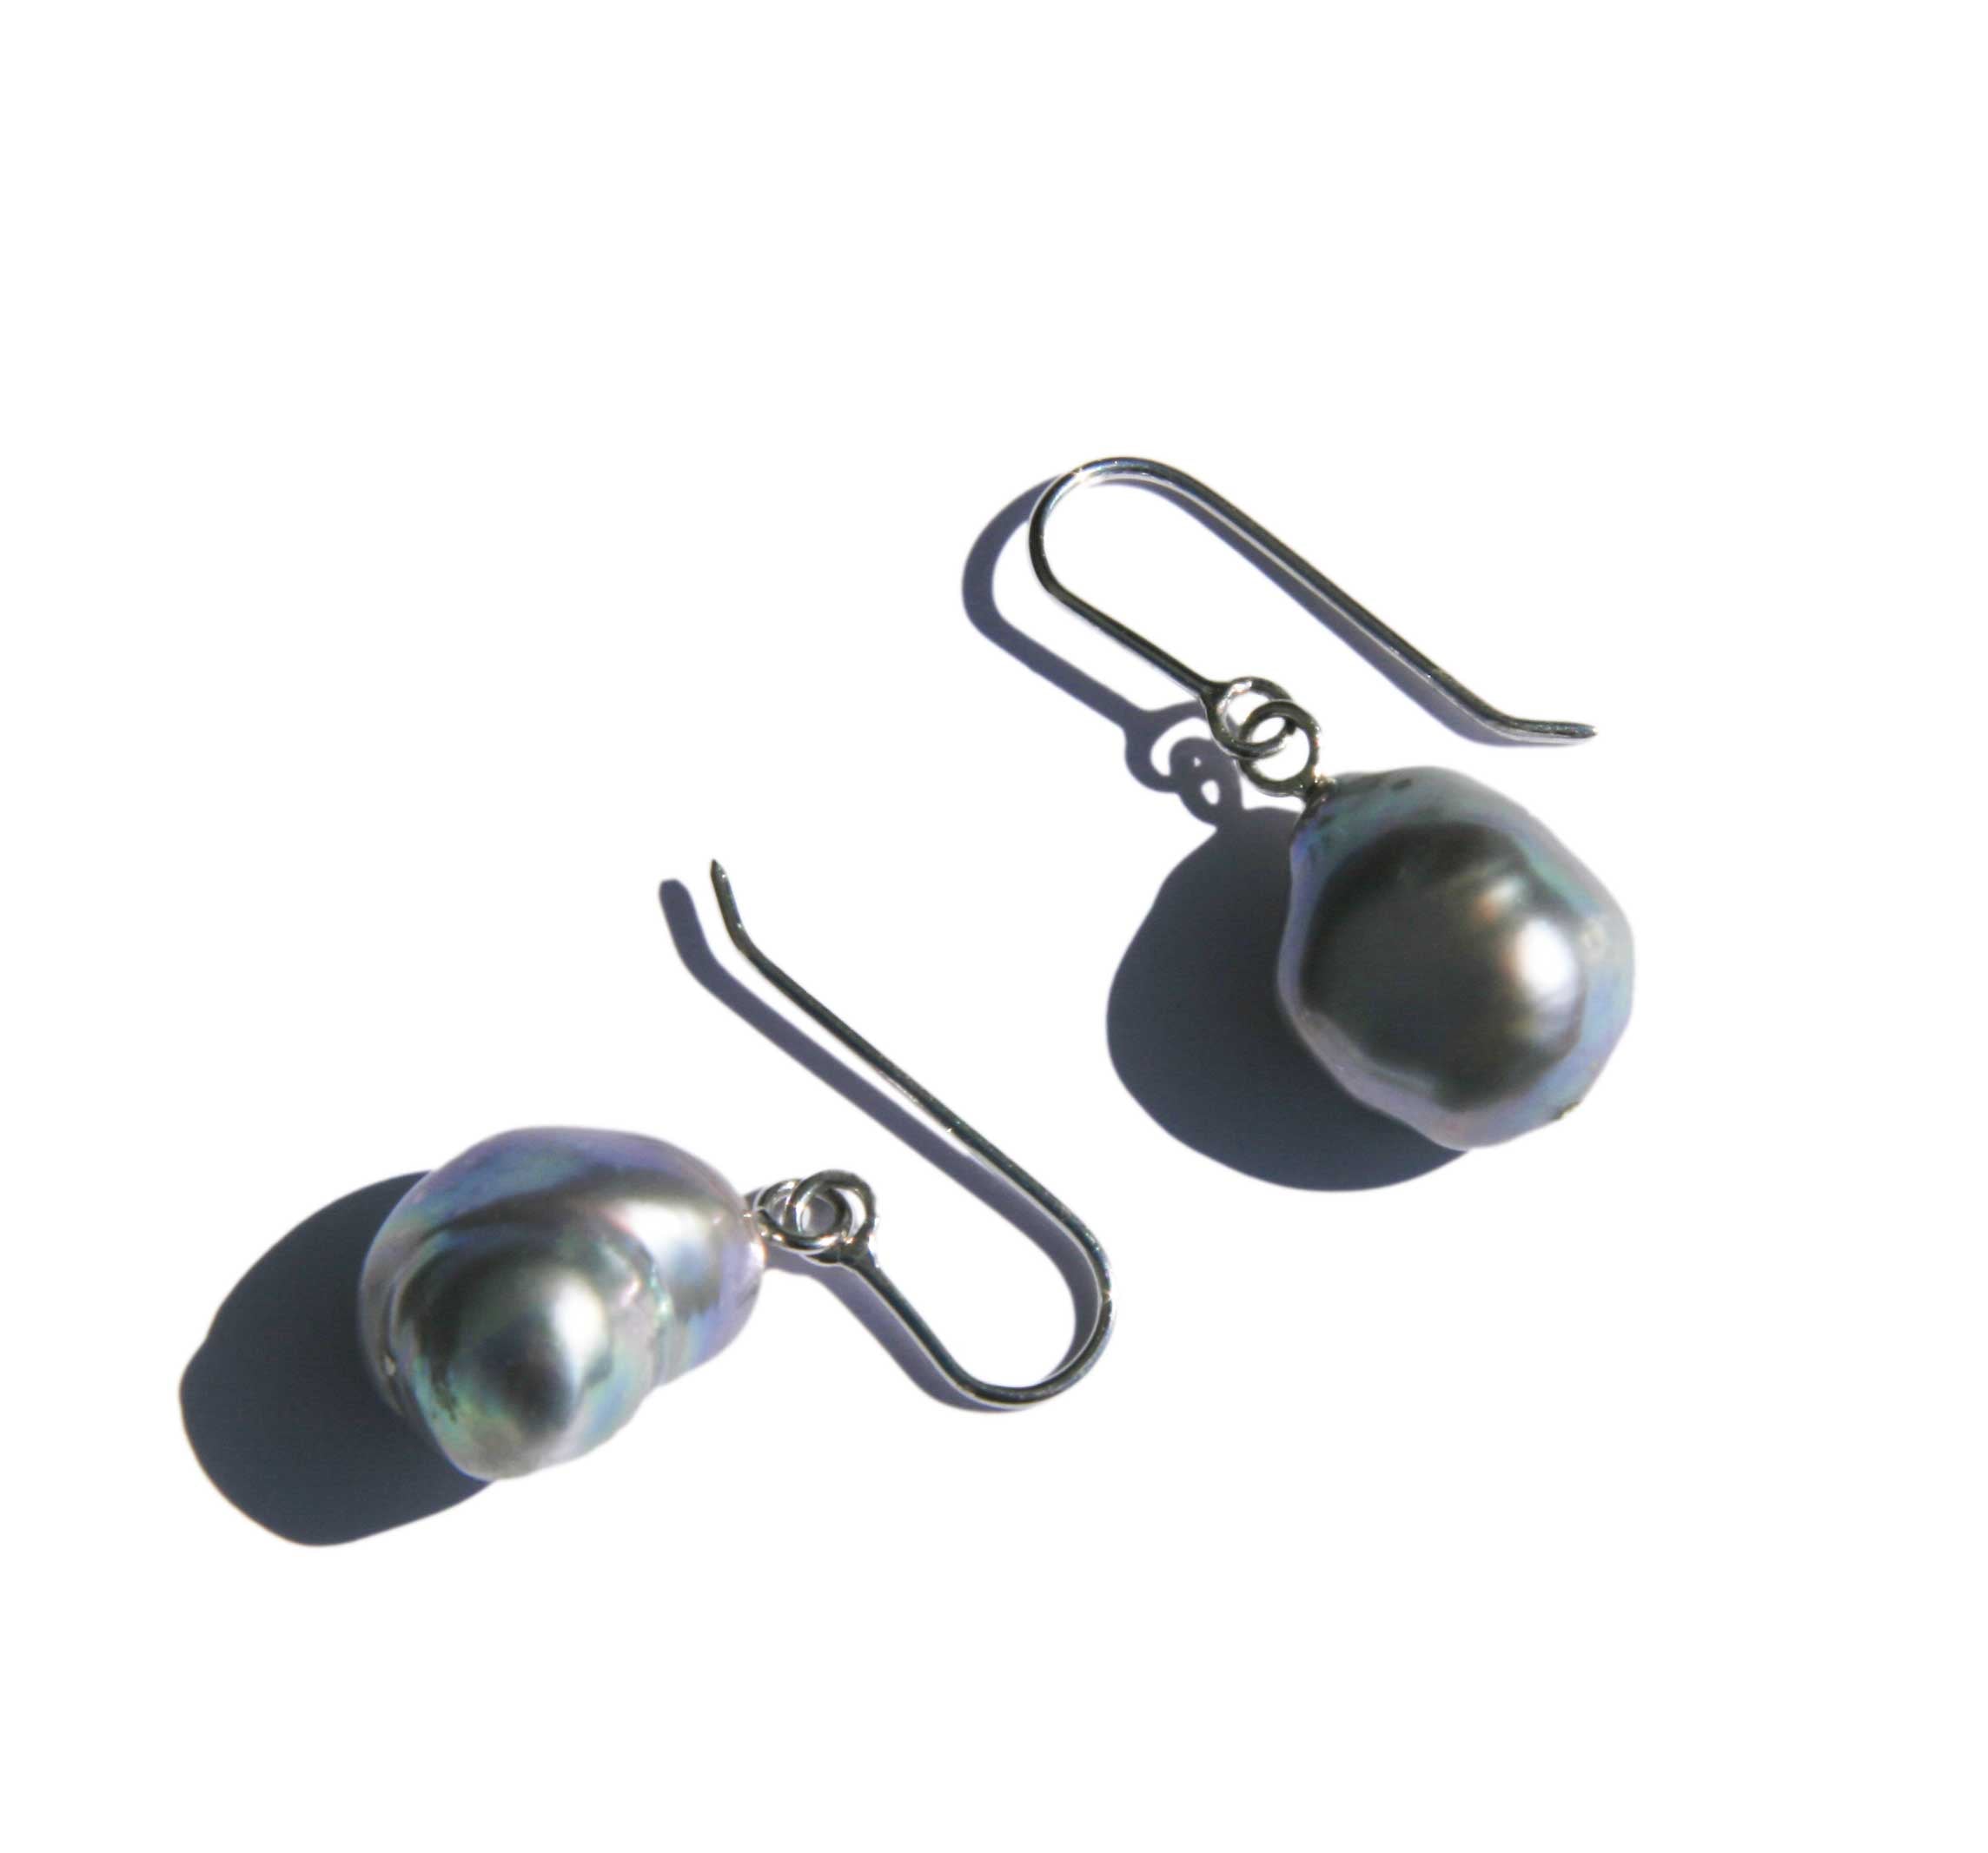 Freshwater pearl earrings with hooks